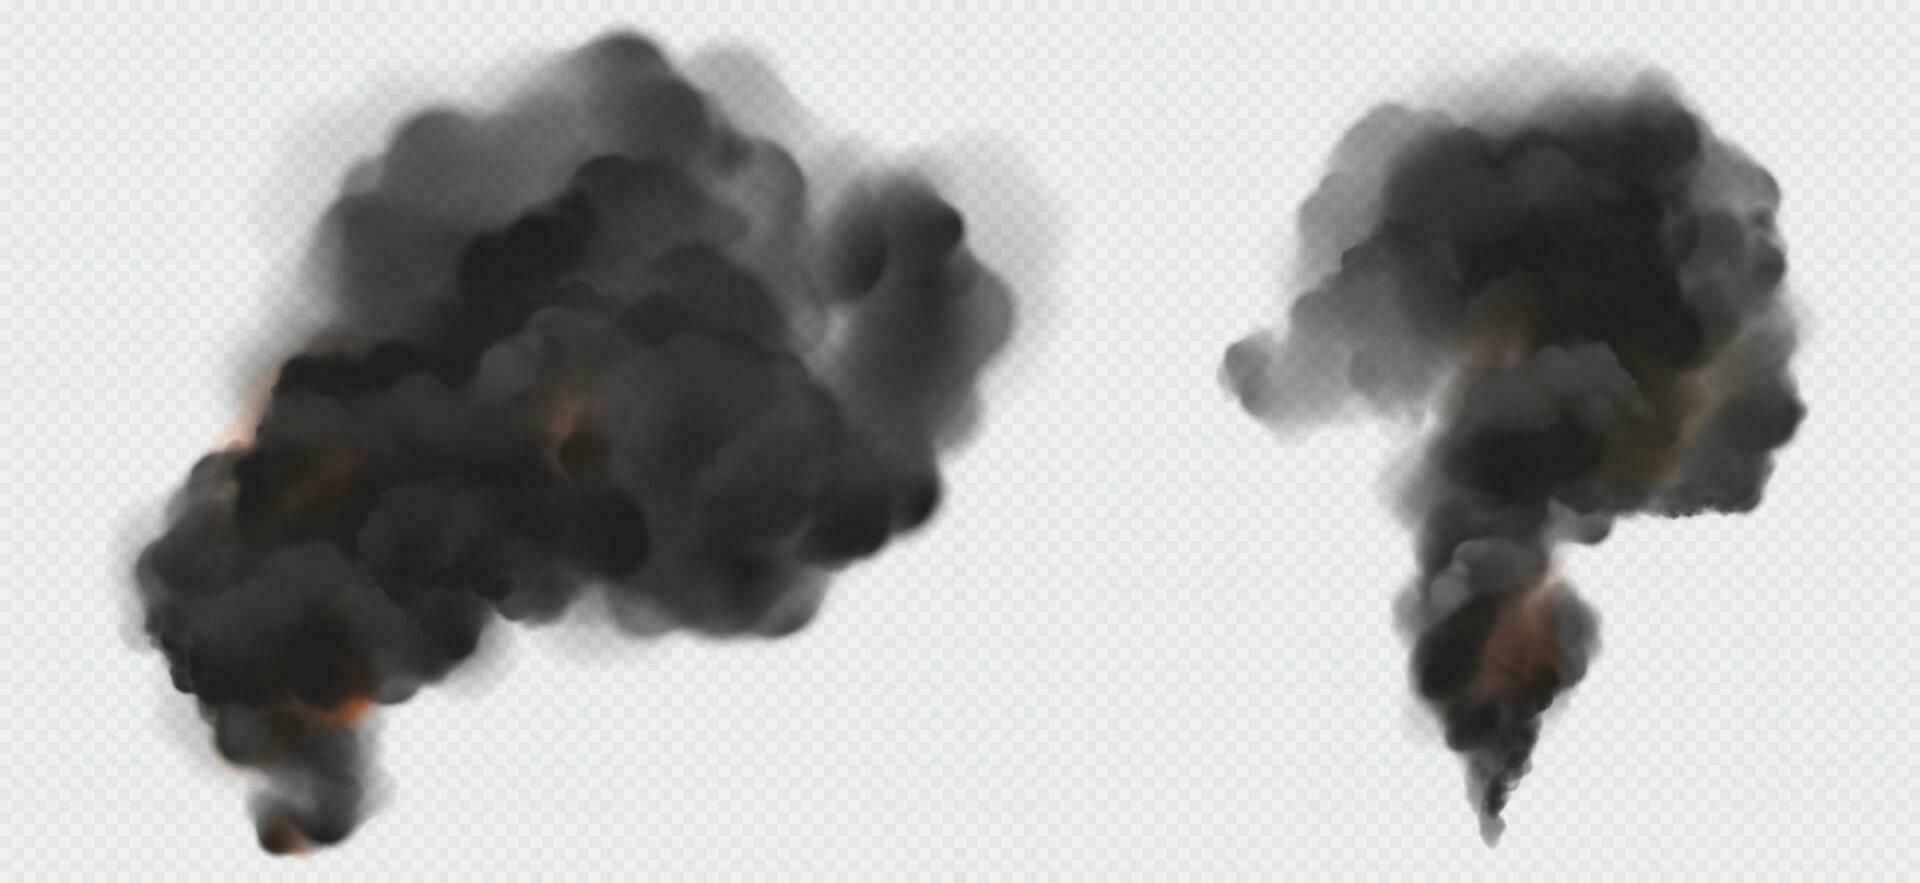 zwart rook of stoom- trails set, industrieel smog vector